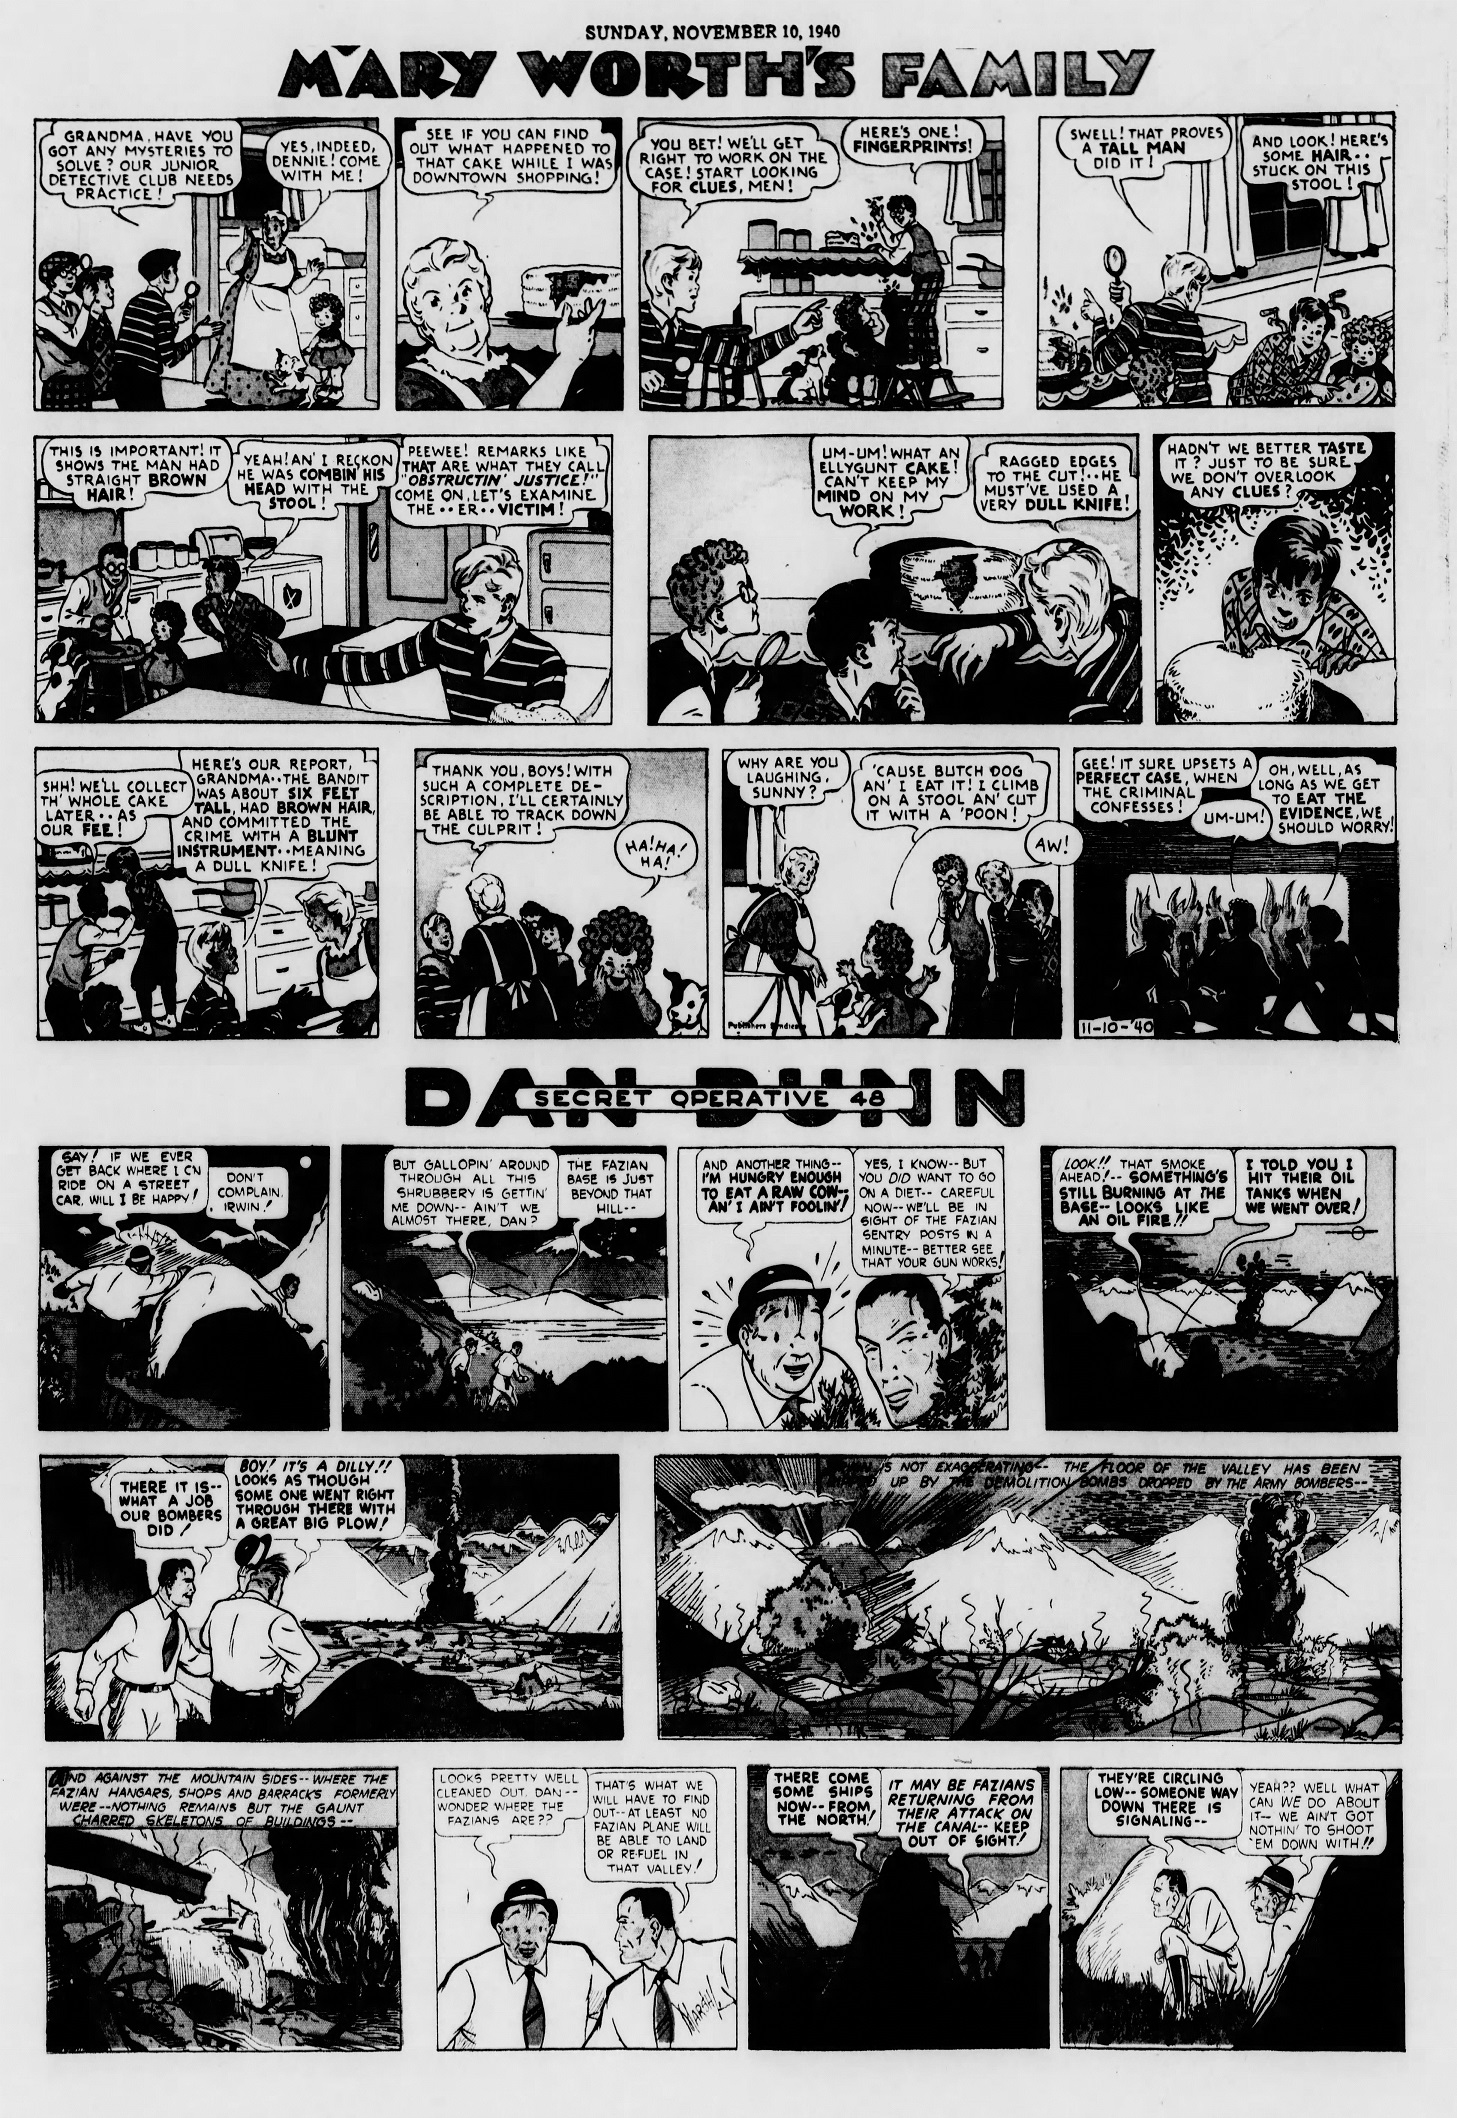 The_Brooklyn_Daily_Eagle_Sun__Nov_10__1940_(9).jpg